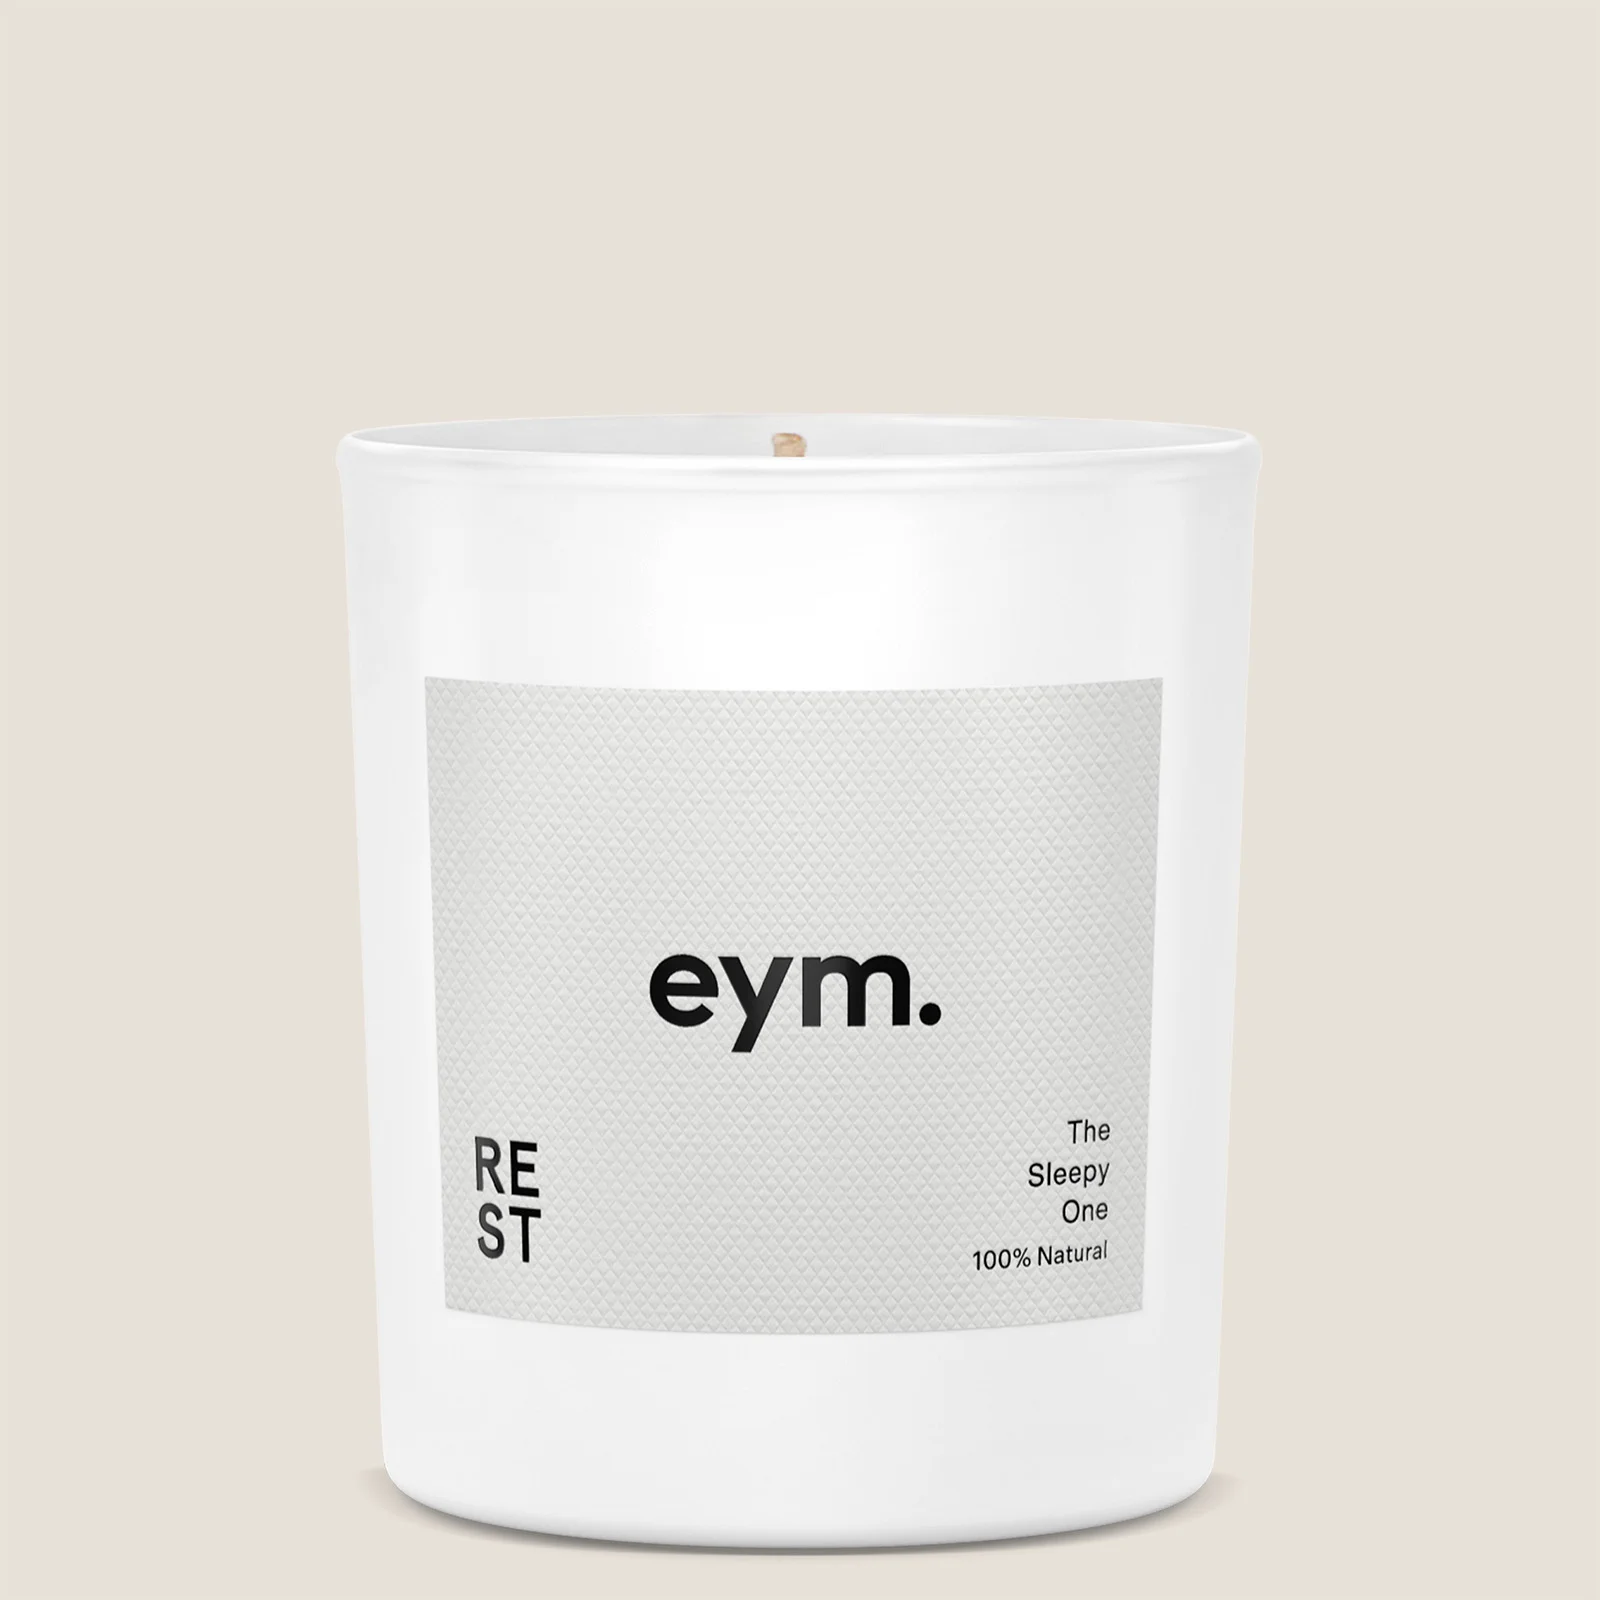 EYM Rest Candle - The Sleepy One Image 1